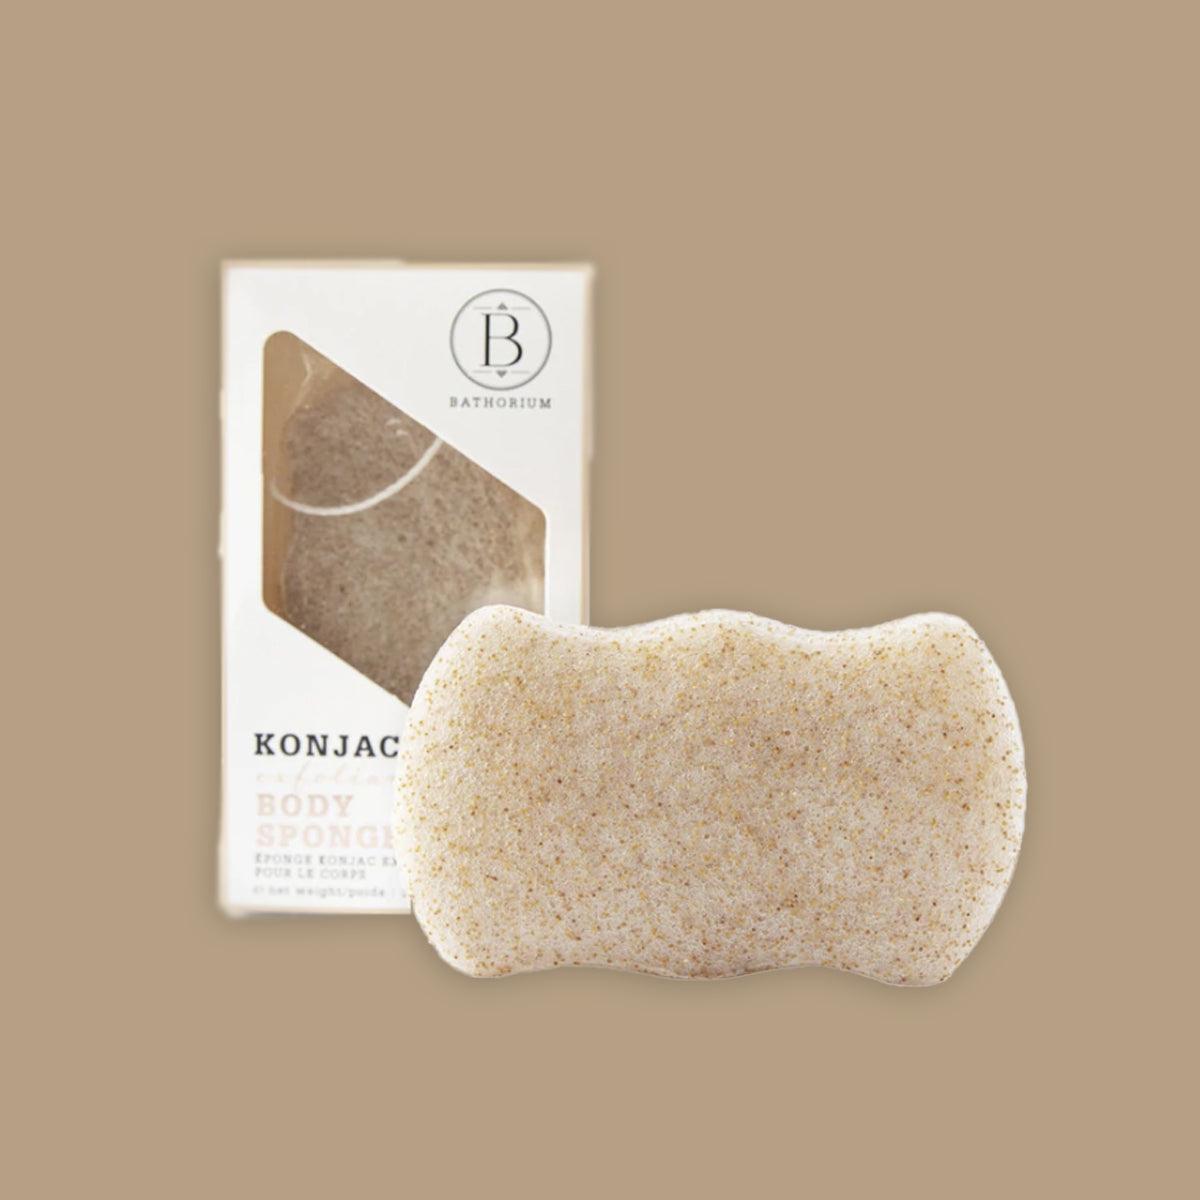 konjac walnut shell exfoliating body sponge - local - letsbelocal.ca